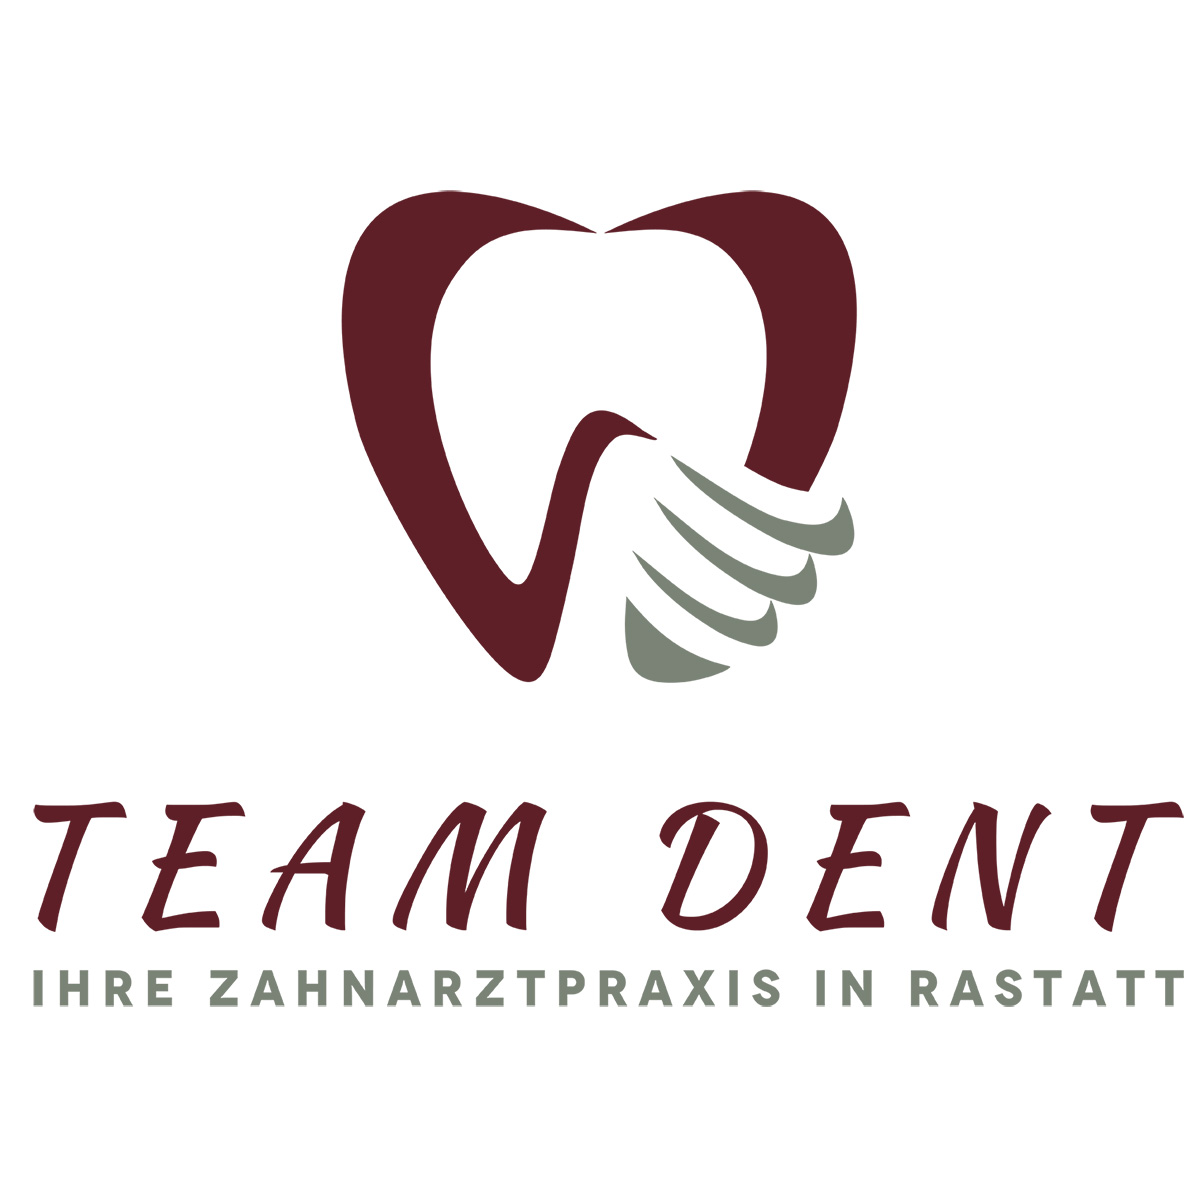 Kundenfoto 5 Zahnarztpraxis Rastatt TEAM DENT